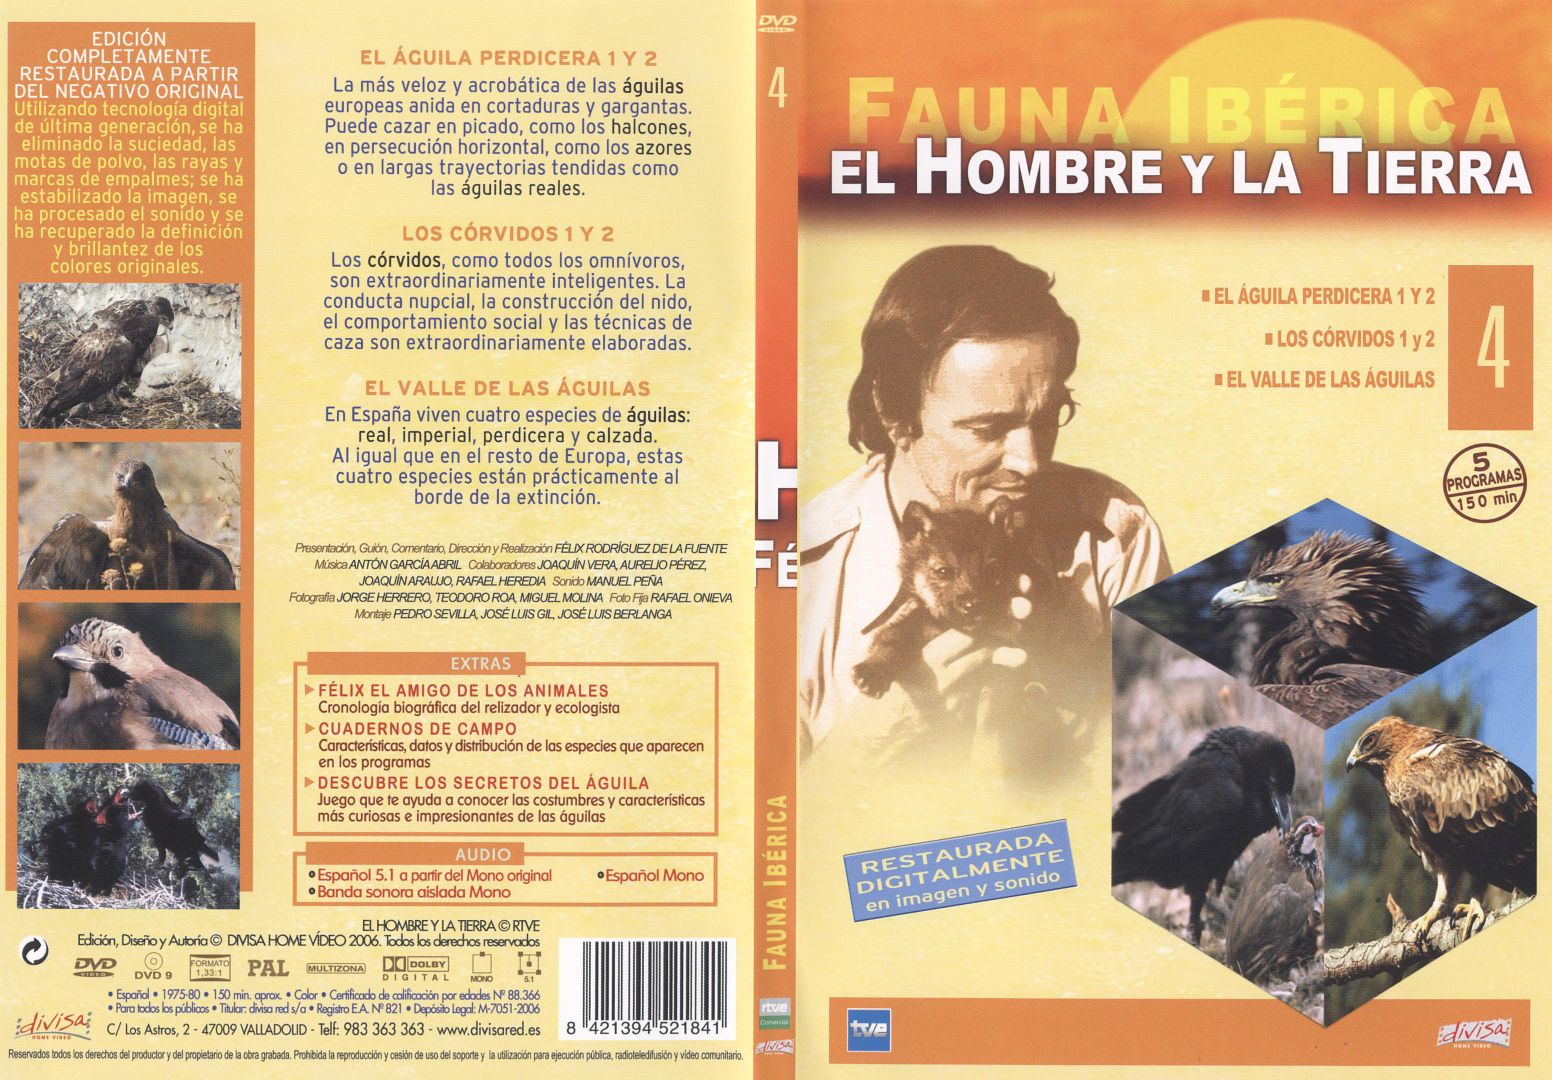 ElHombreylaTierra2006 DVD4CaratulaAlt20aResolucioned2kmagazinecom - El Hombre y la Tierra (Fauna Iberica) DVD 4